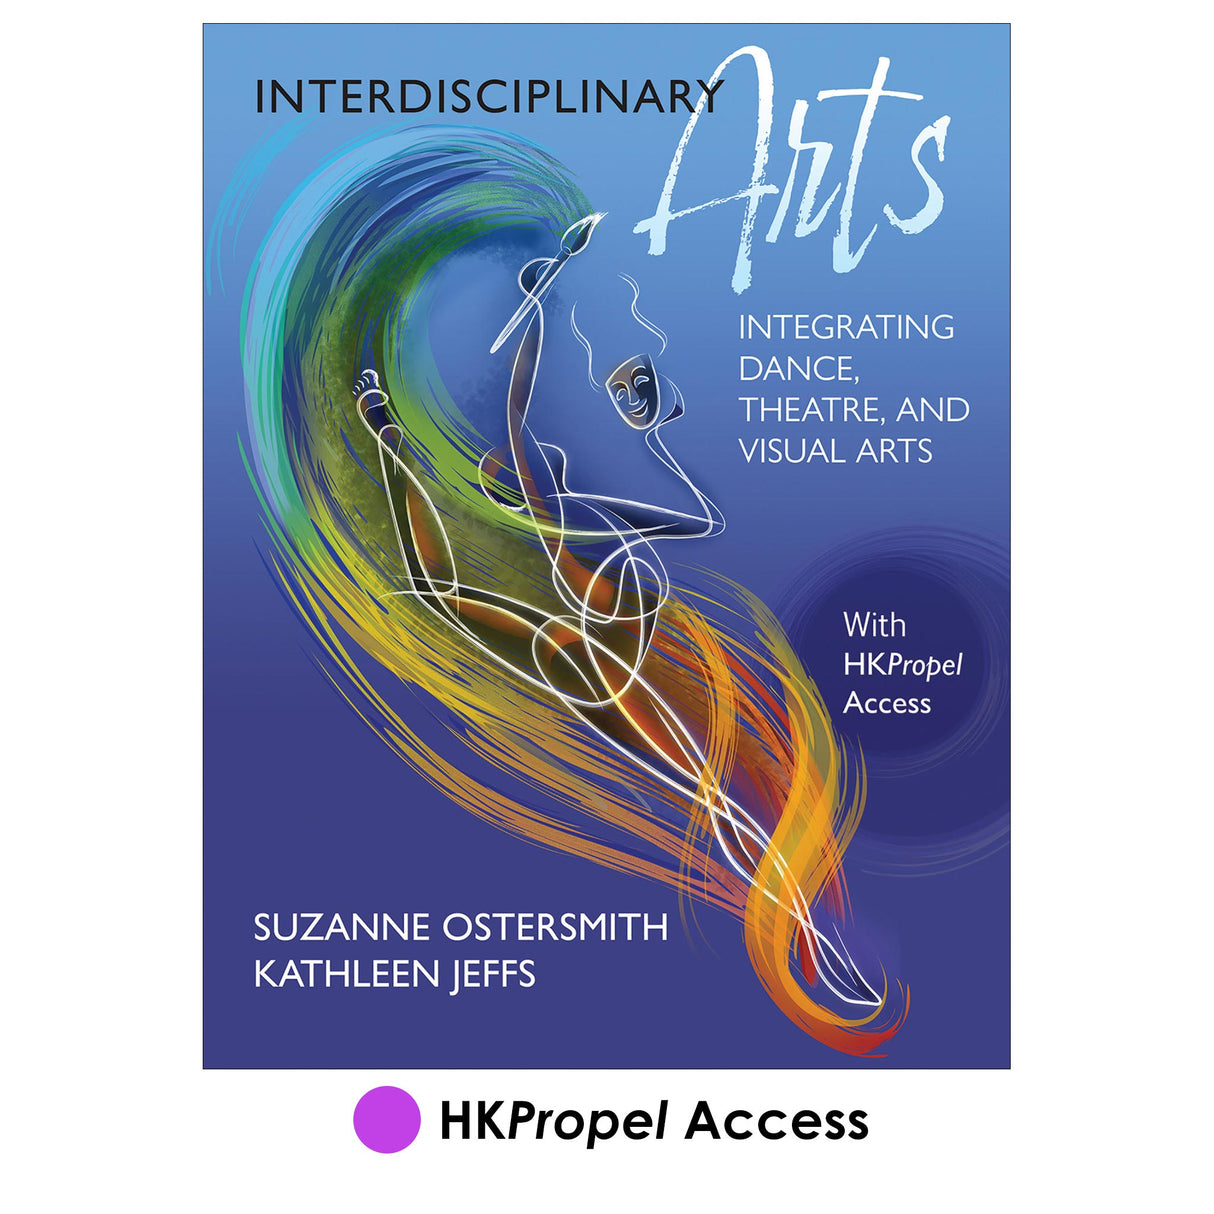 Interdisciplinary Arts HKPropel Access